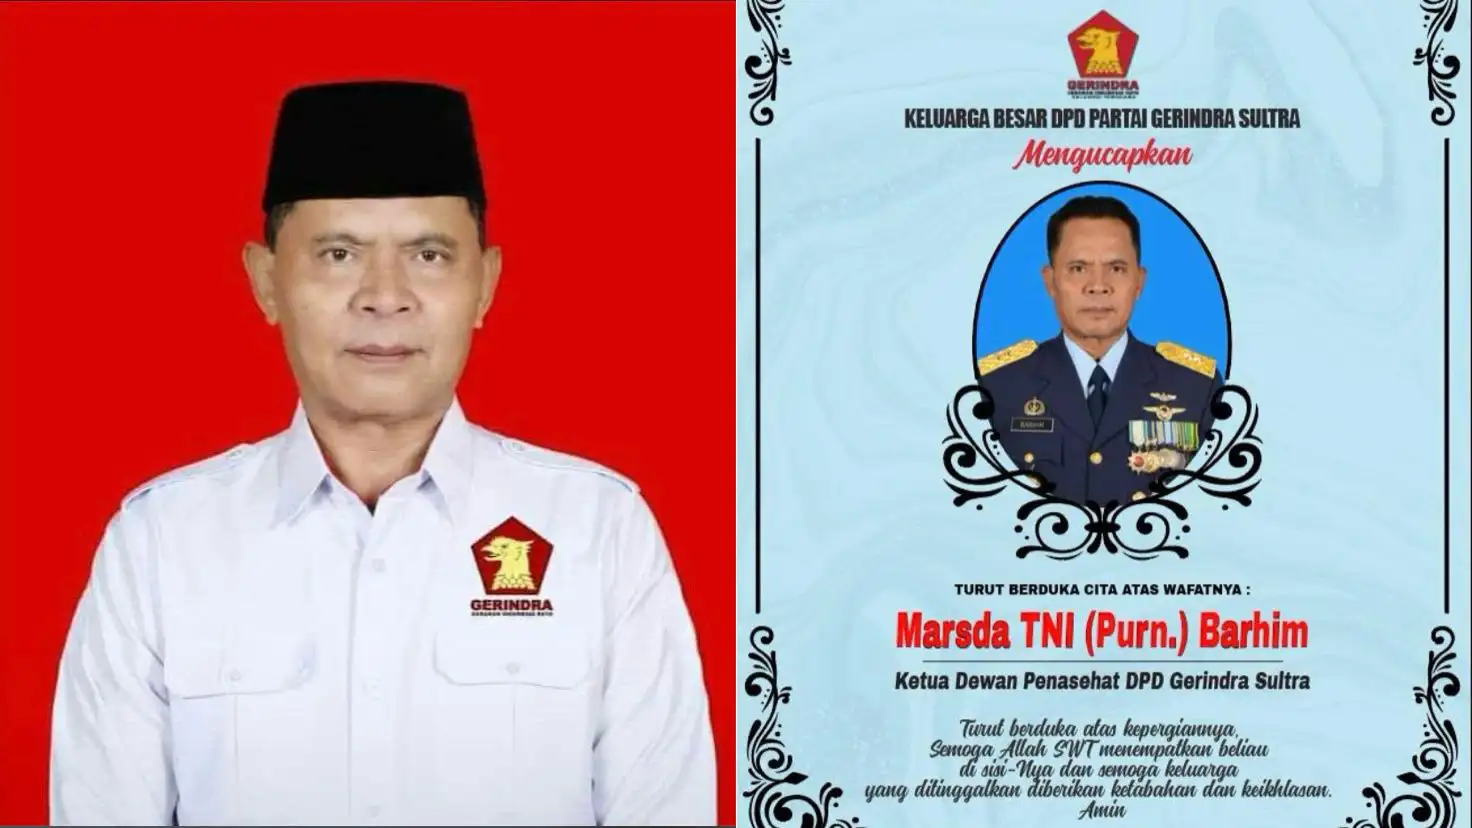 Marsda TNI (Purn) Barhim Caleg Partai Gerindra Sulawesi Tenggara Meninggal Dunia